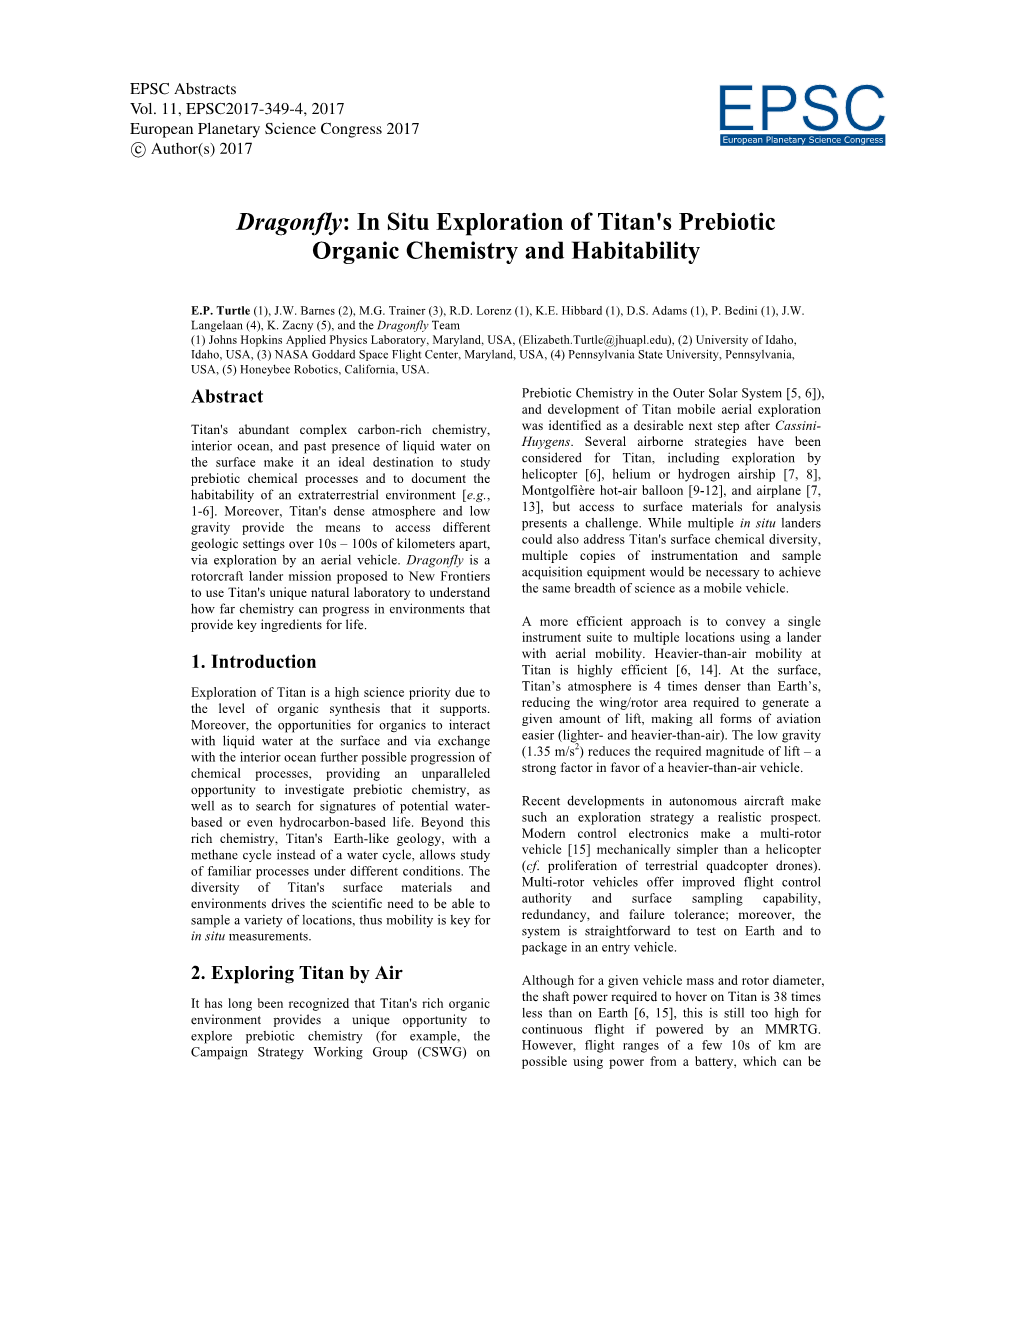 In Situ Exploration of Titan's Prebiotic Organic Chemistry and Habitability